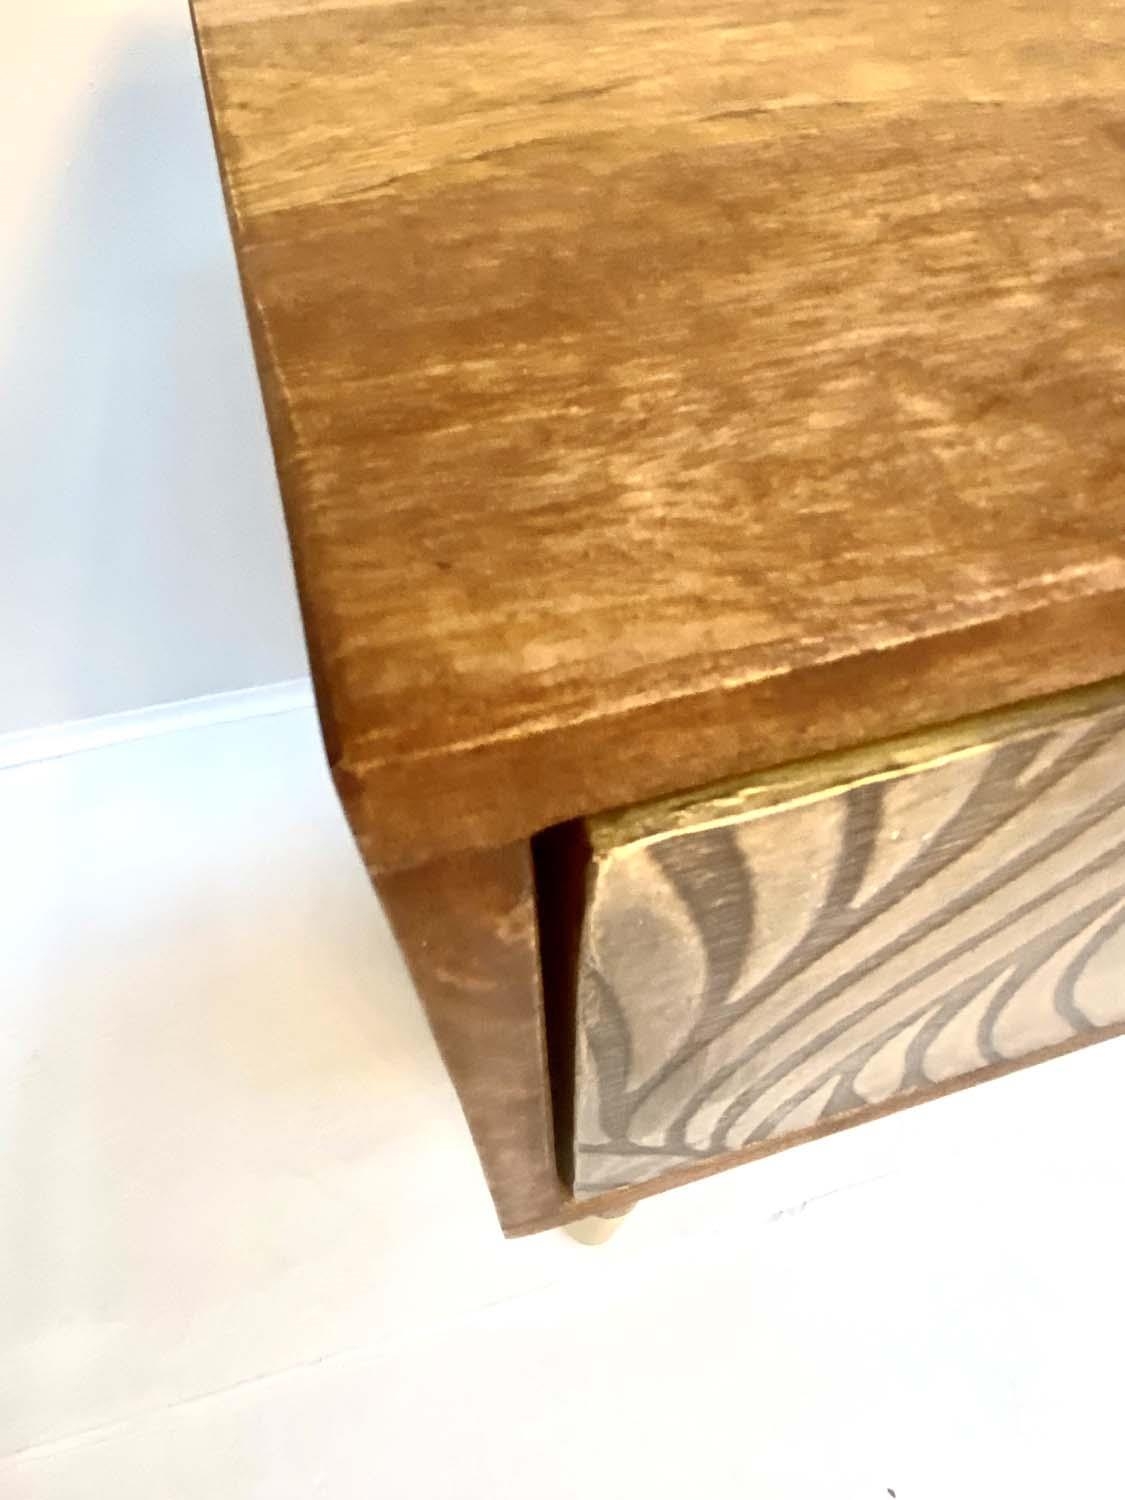 SIDE TABLES, a pair, 51cm H x 50cm W x 41cm D, 1970s Italian style, cedar wood finish, gilt metal - Image 2 of 4